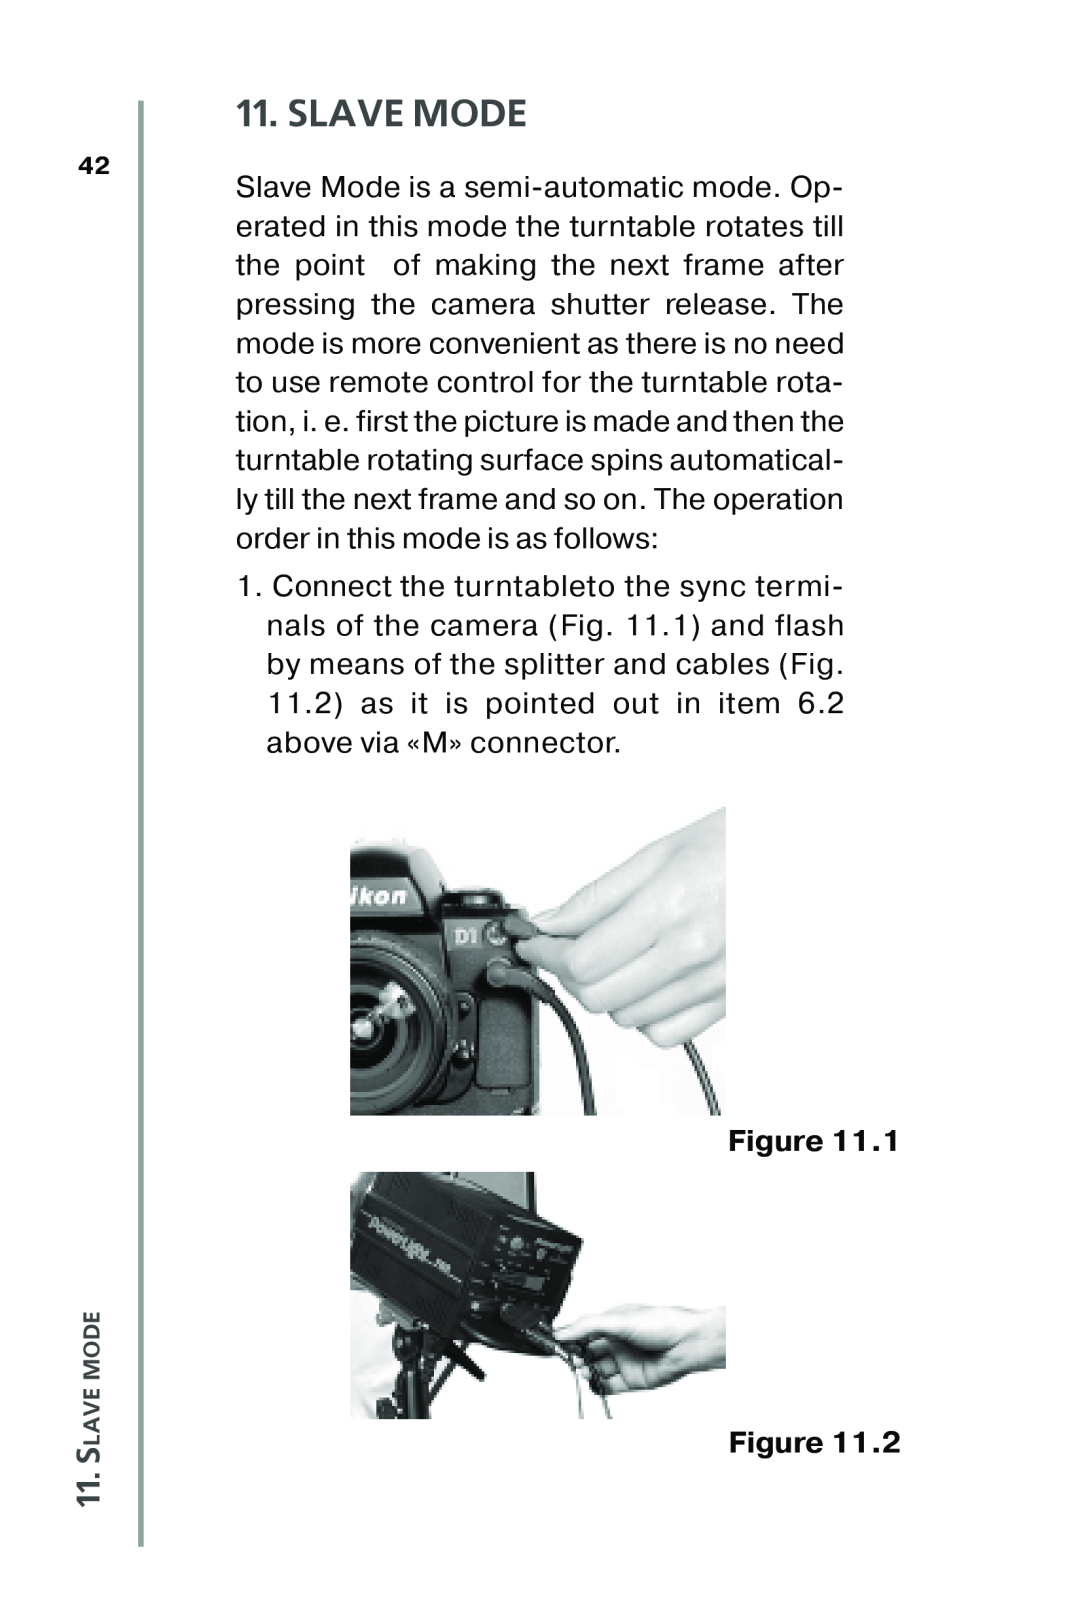 Nikon XT350, XT100 manual Slave Mode, Figure Figure 